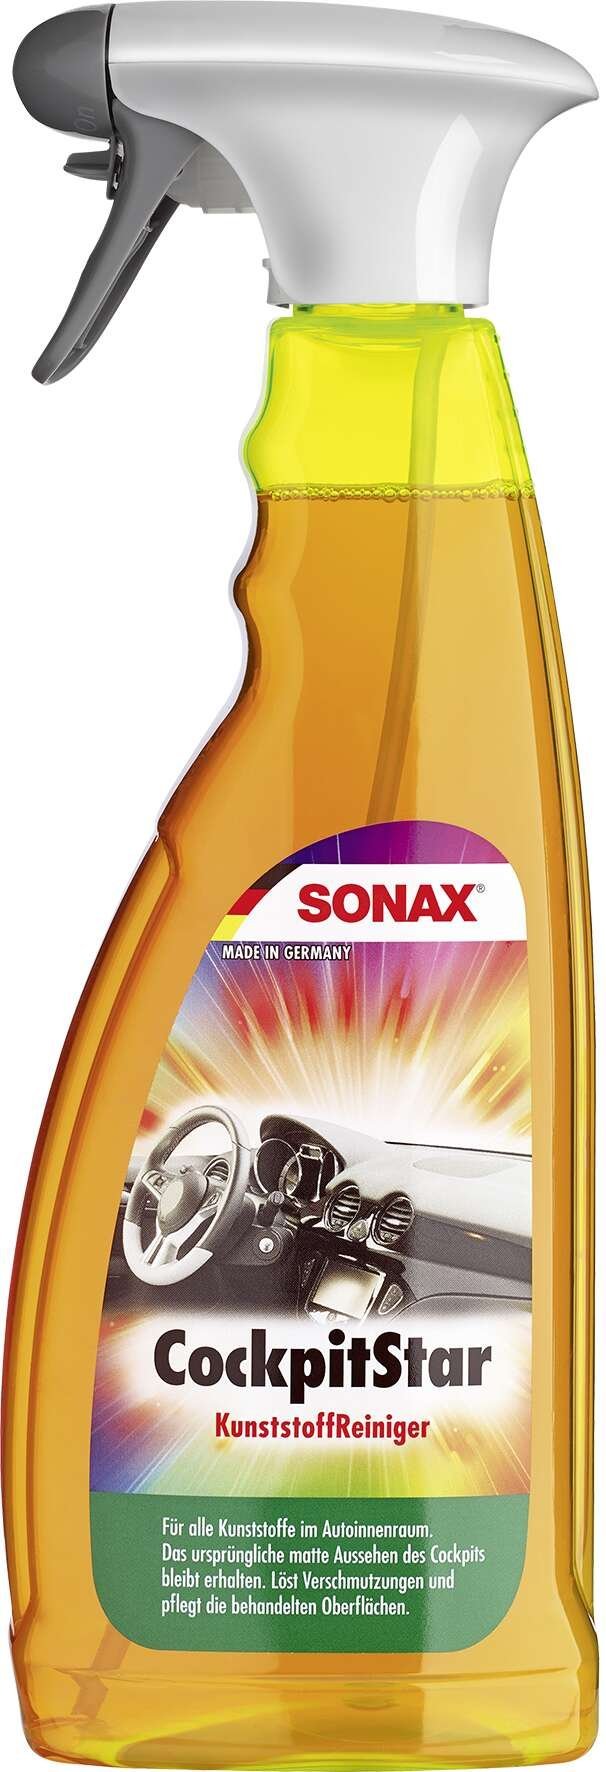 SONAX CockpitStar Flacone spray in PET da 750 ml